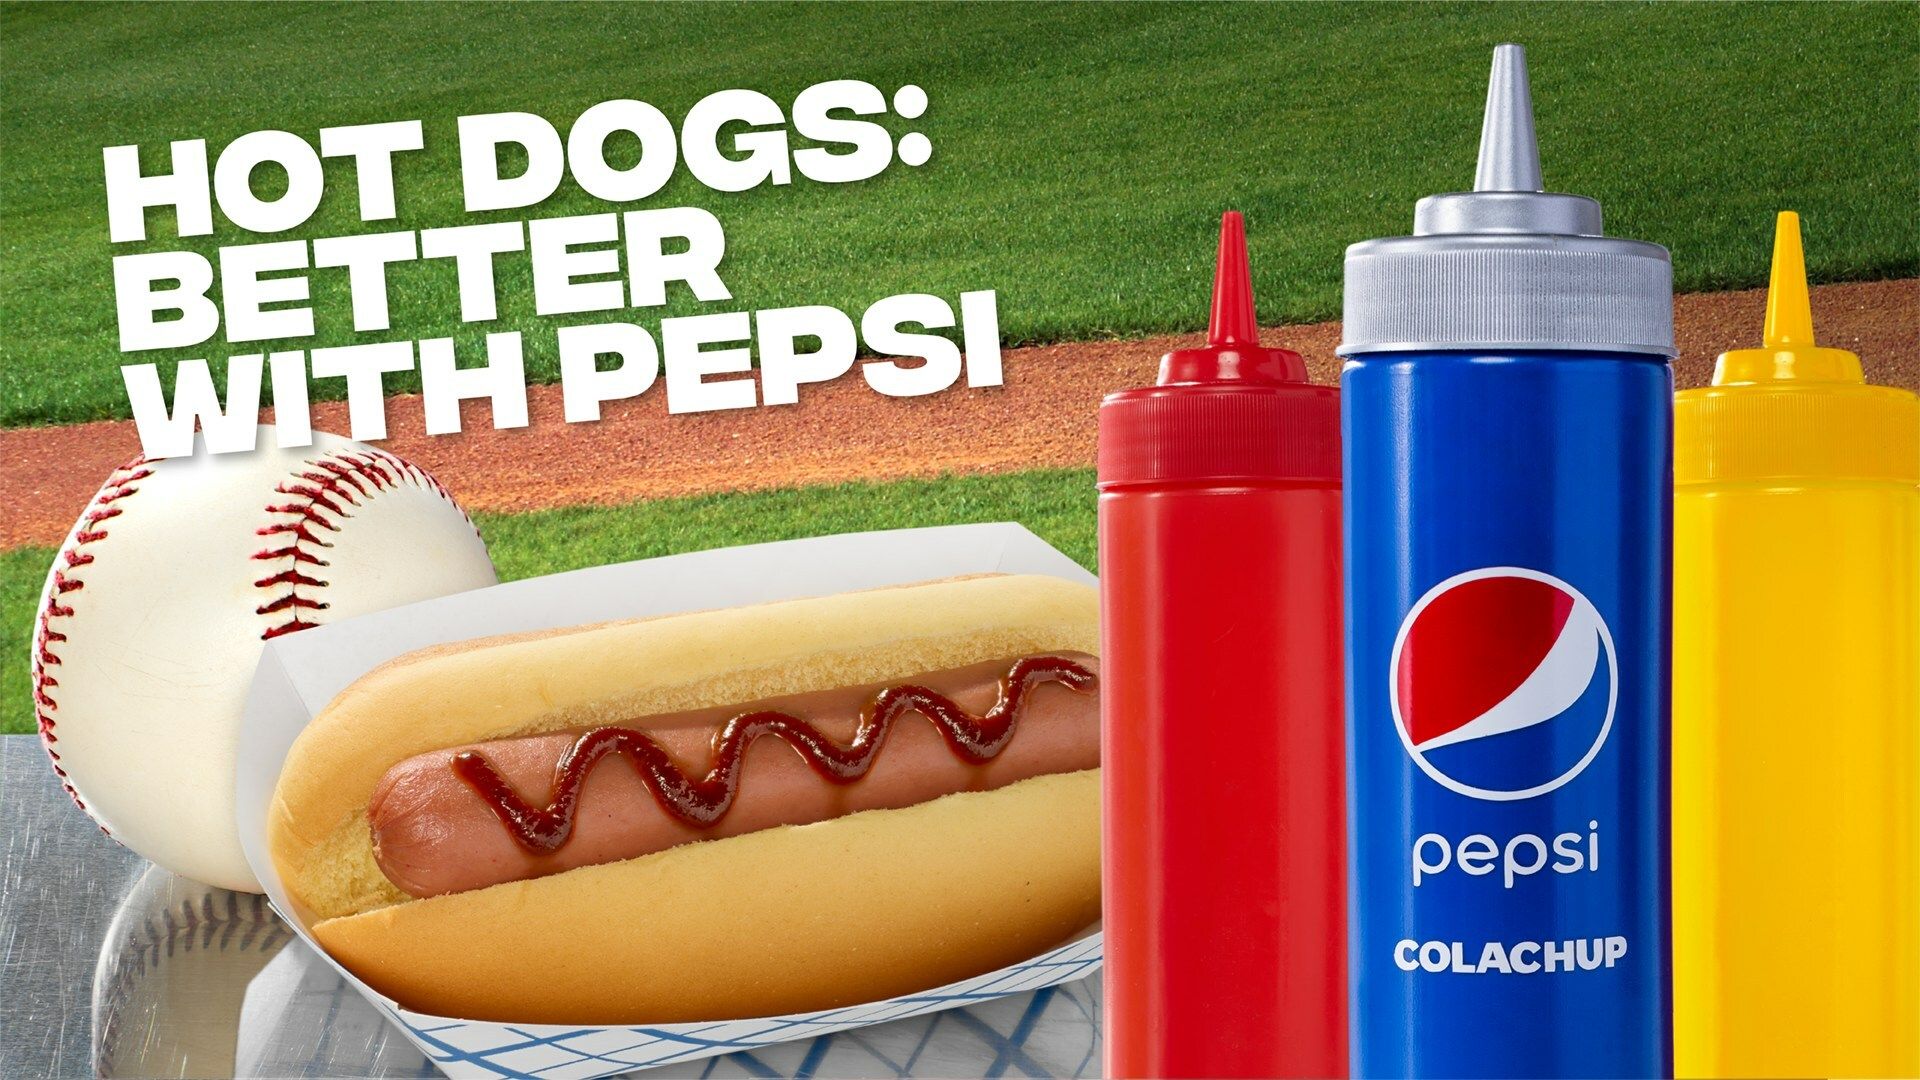 Pepsi_BWP_Hot_Dogs.jpg